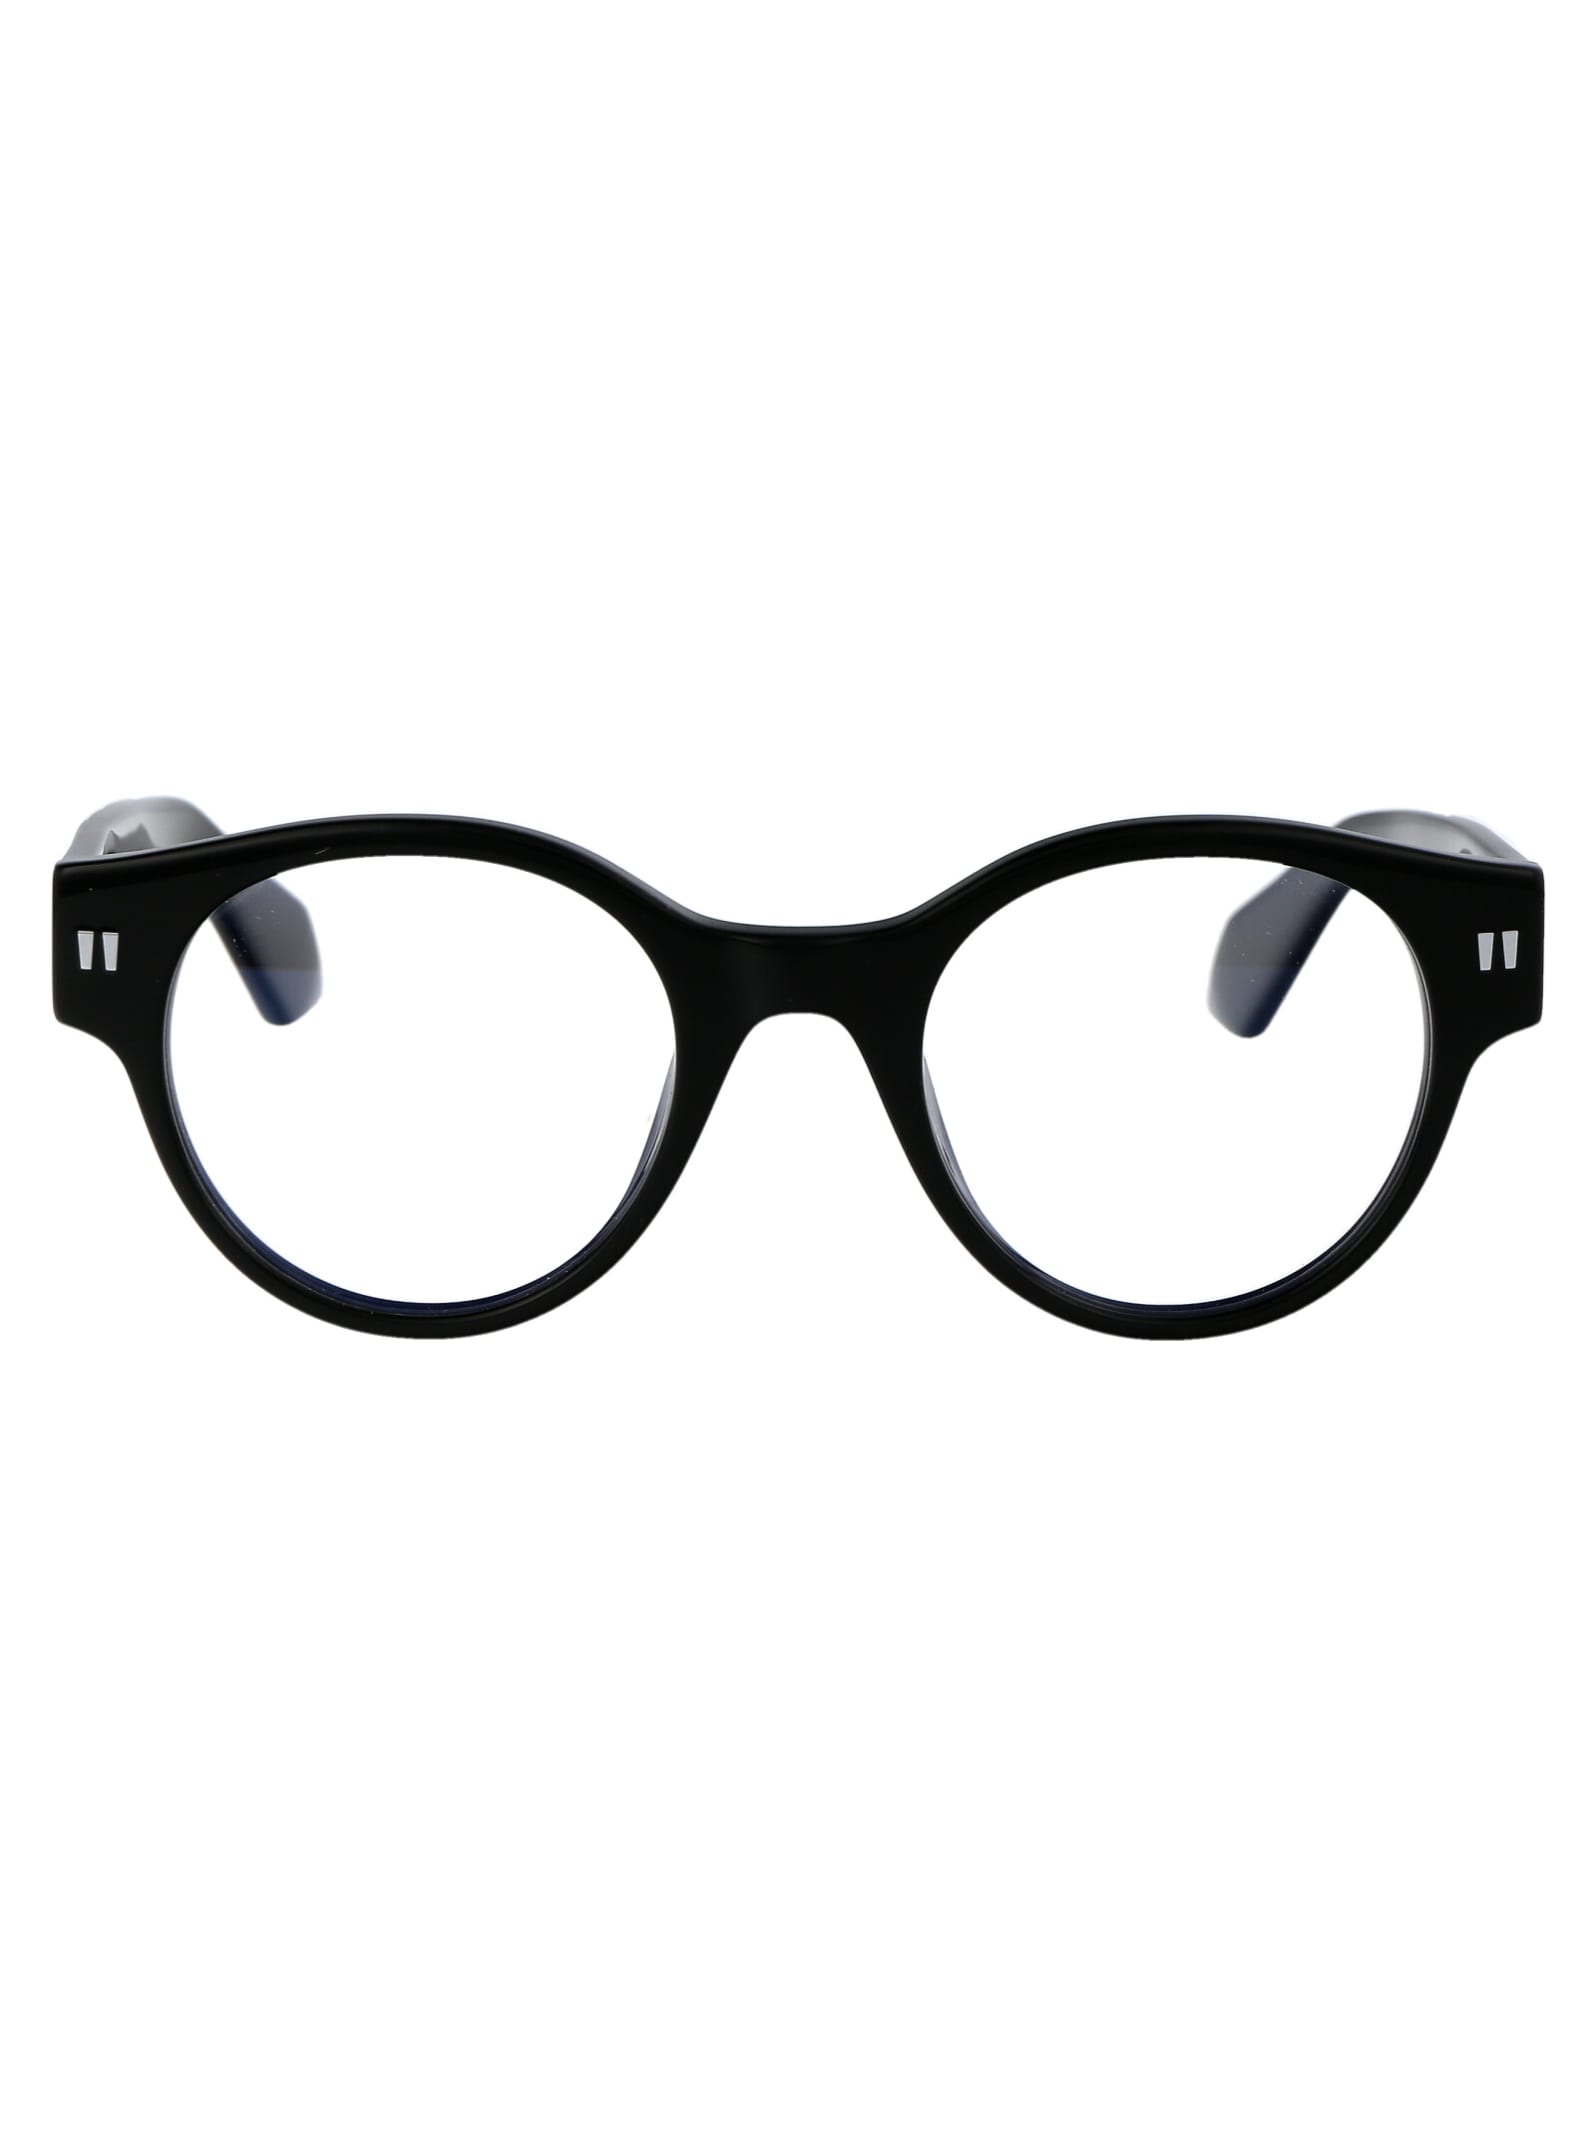 Optical Style 55 Glasses